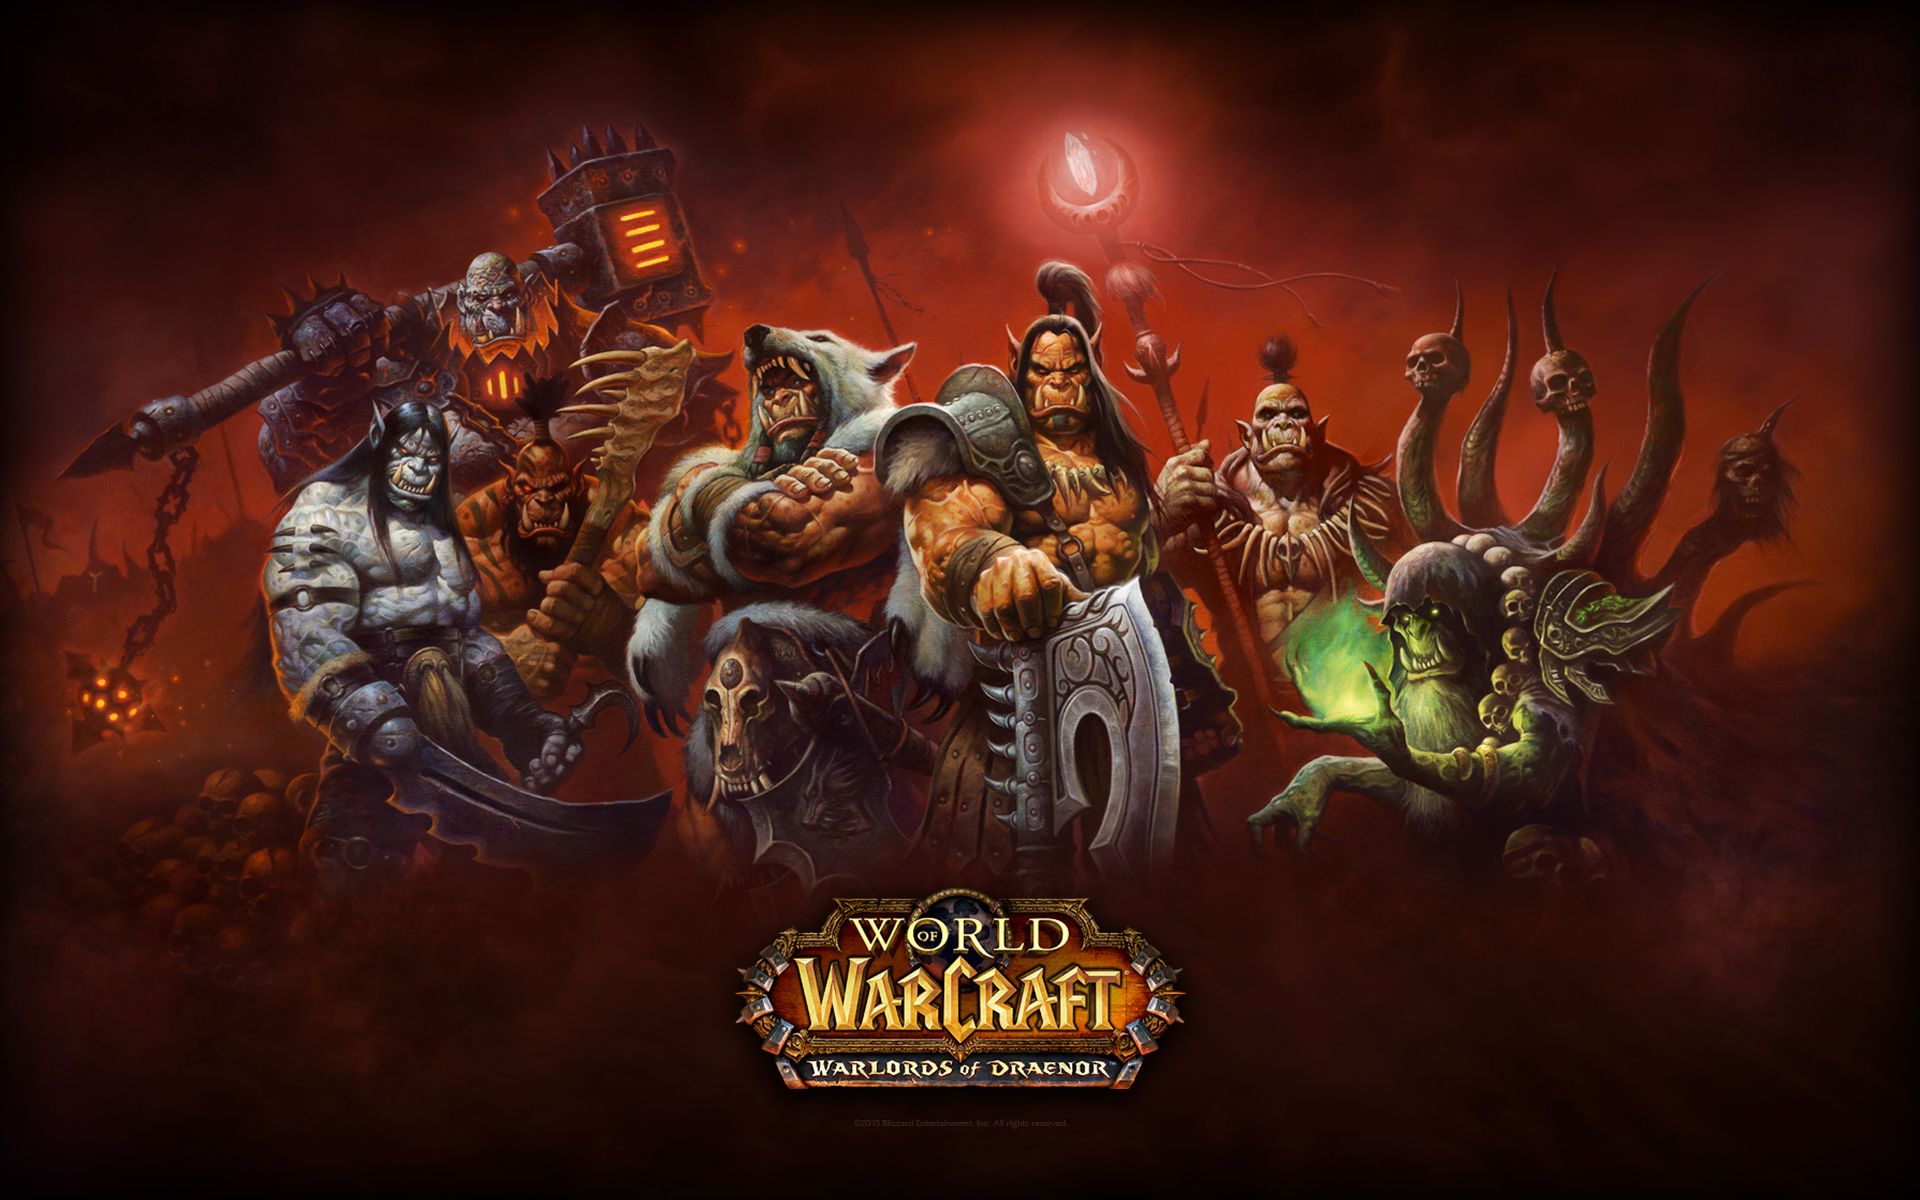 world of warcraft 9.2 5 download